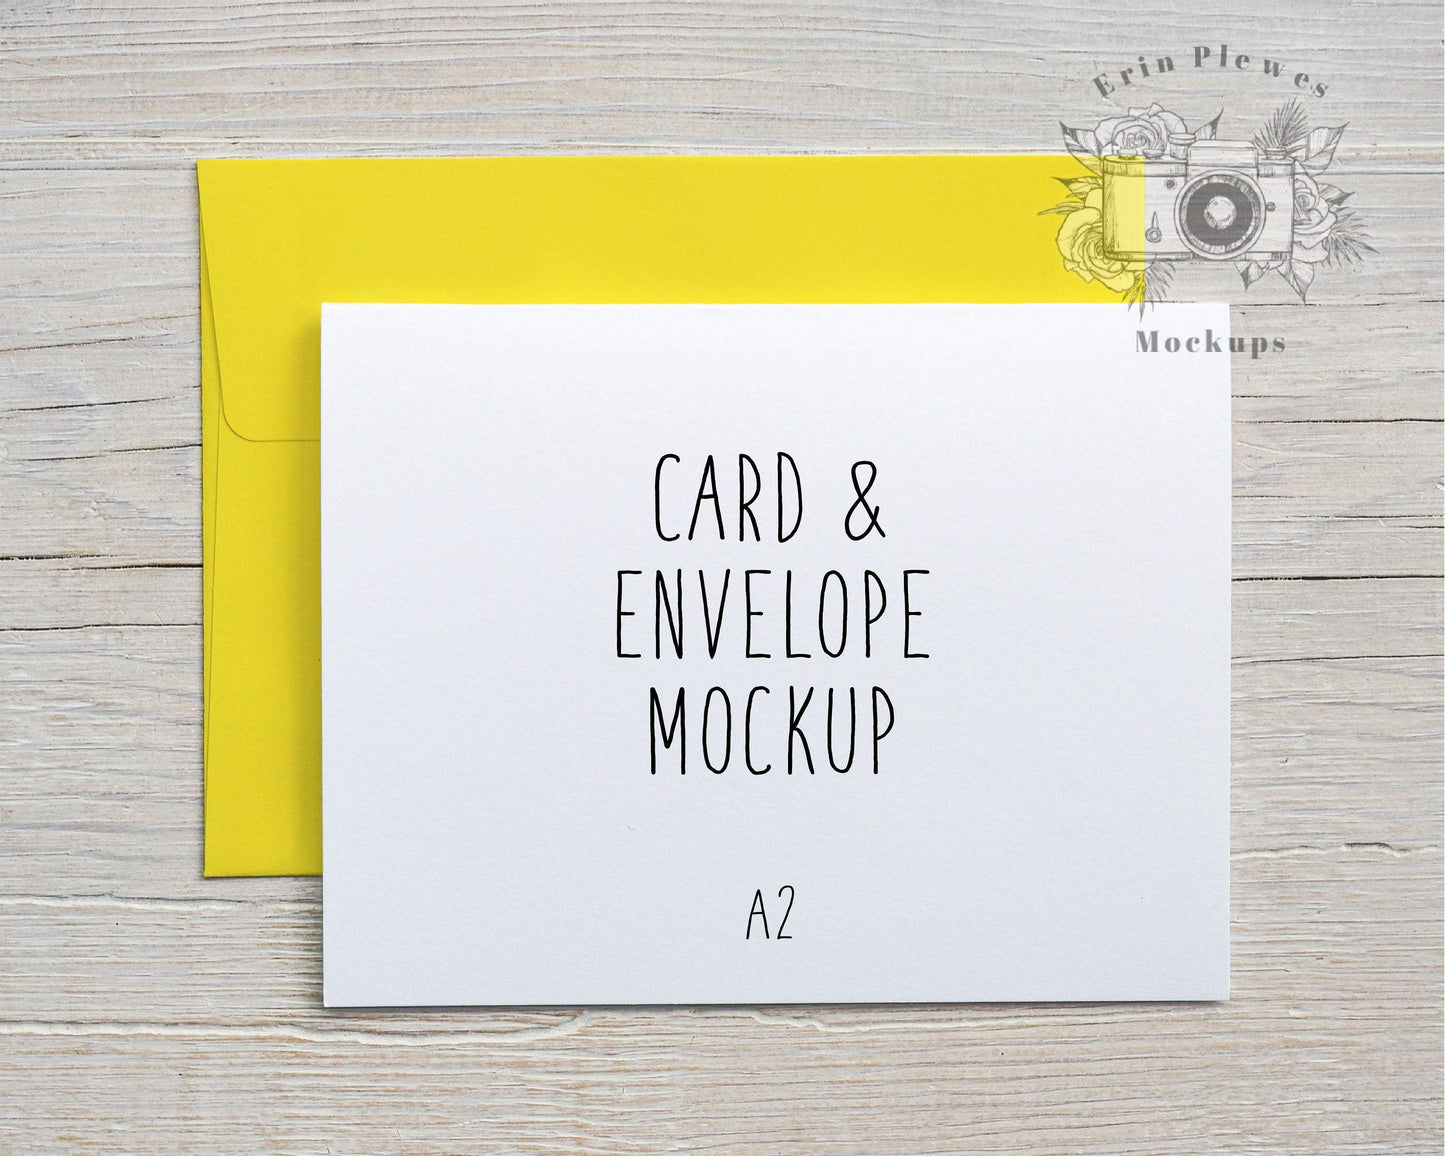 Erin Plewes Mockups Card Mockup Yellow Envelope A2 , Thank You Card Mock Up, A2 Invitation Flatlay with Envelope, Jpeg Instant Digital Download